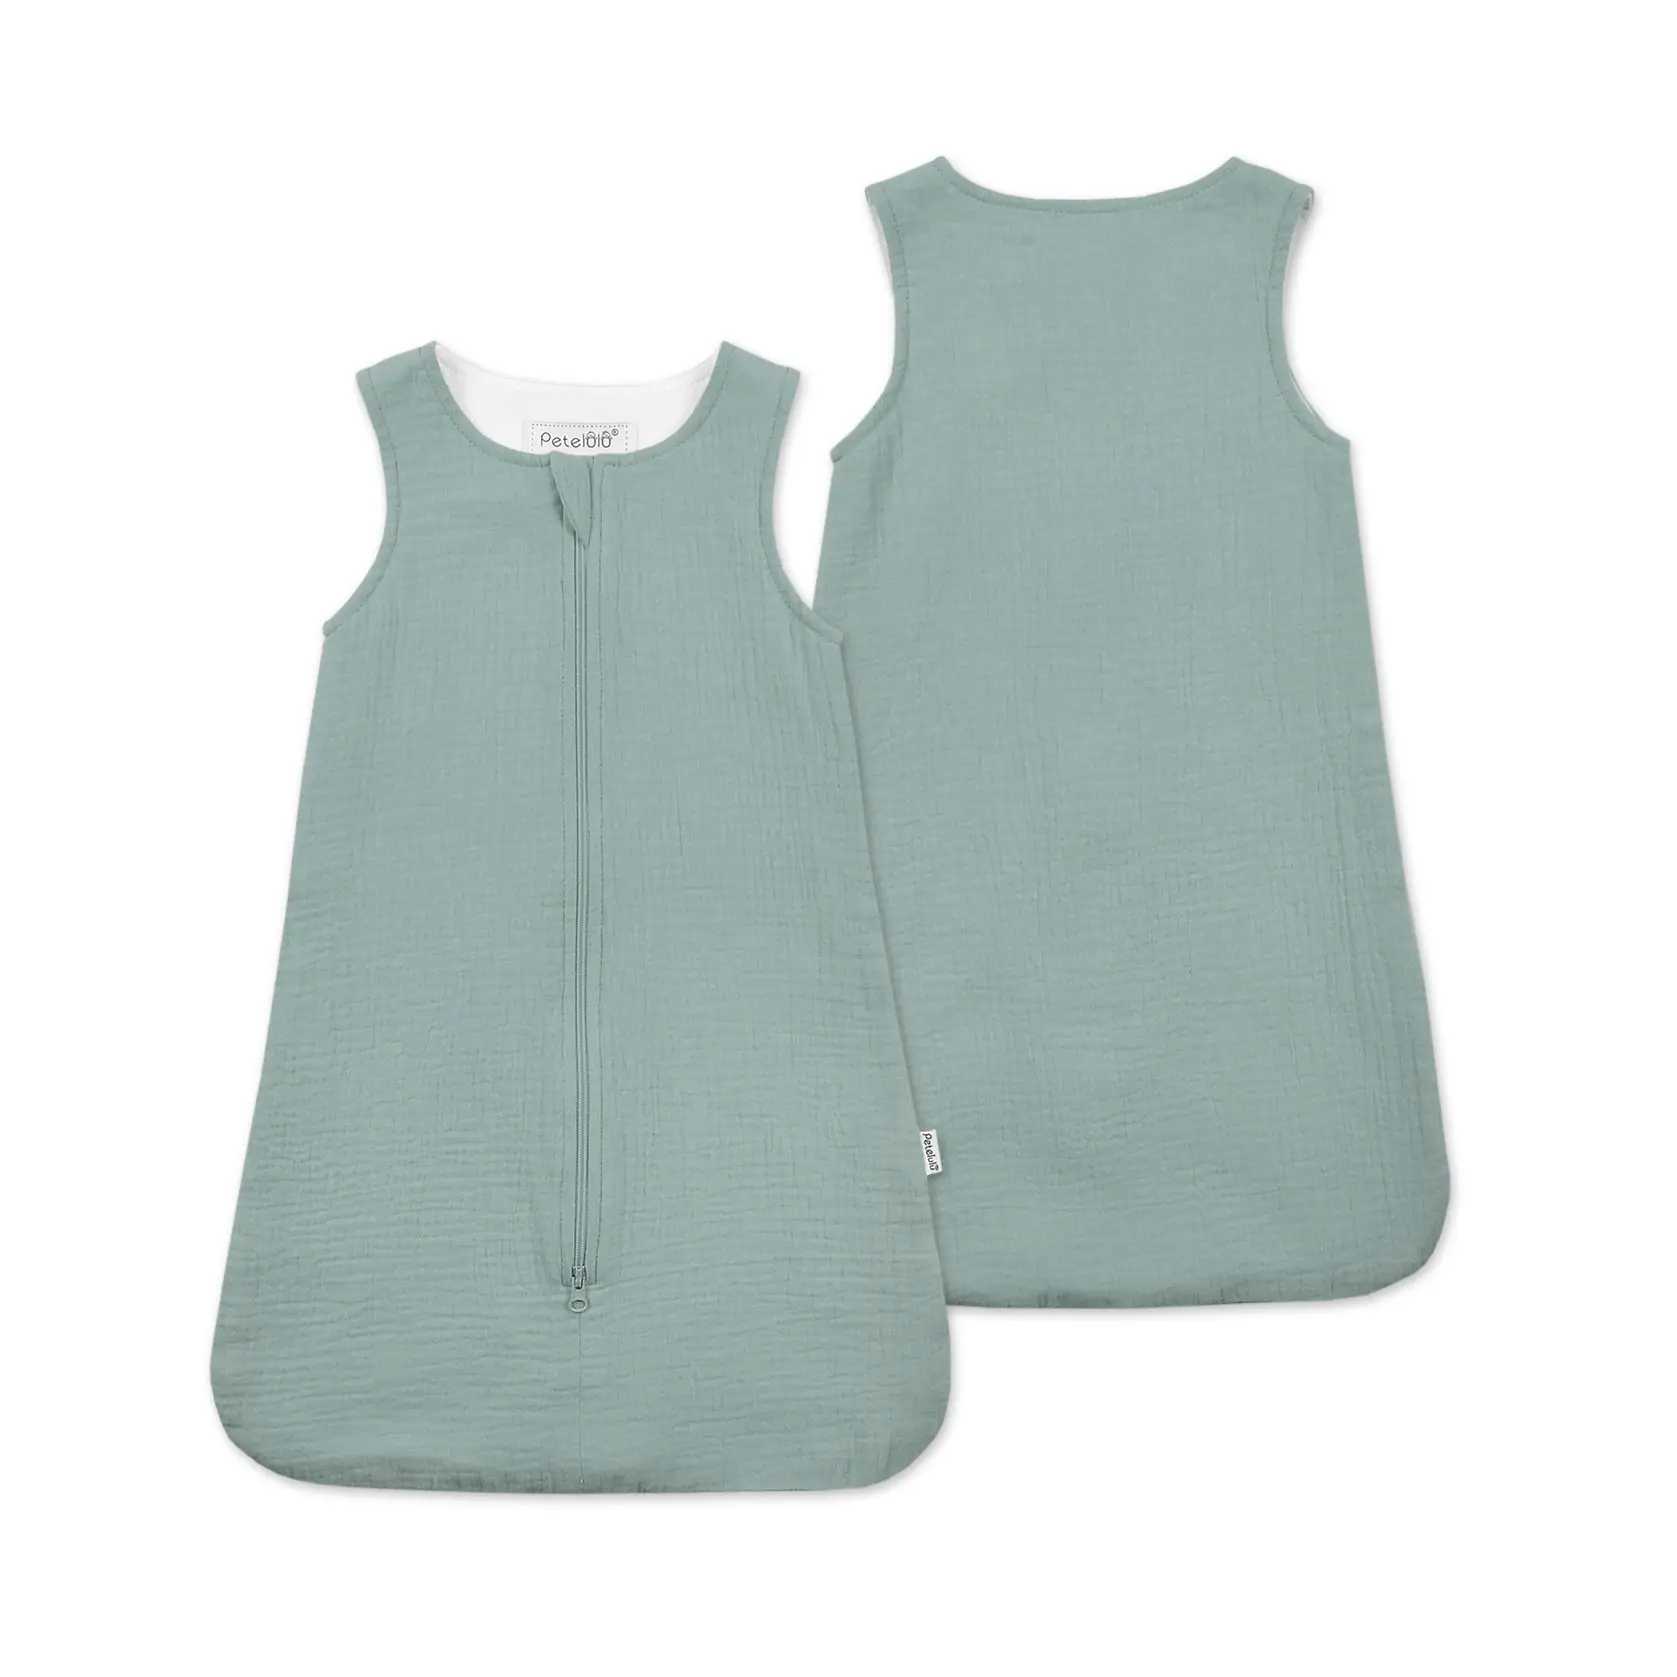 Organic Muslin Baby Sleeping Bag 100% Cotton Plain Dye Toddler Sleeping Sacks New Born Baby Accessories Gift Set